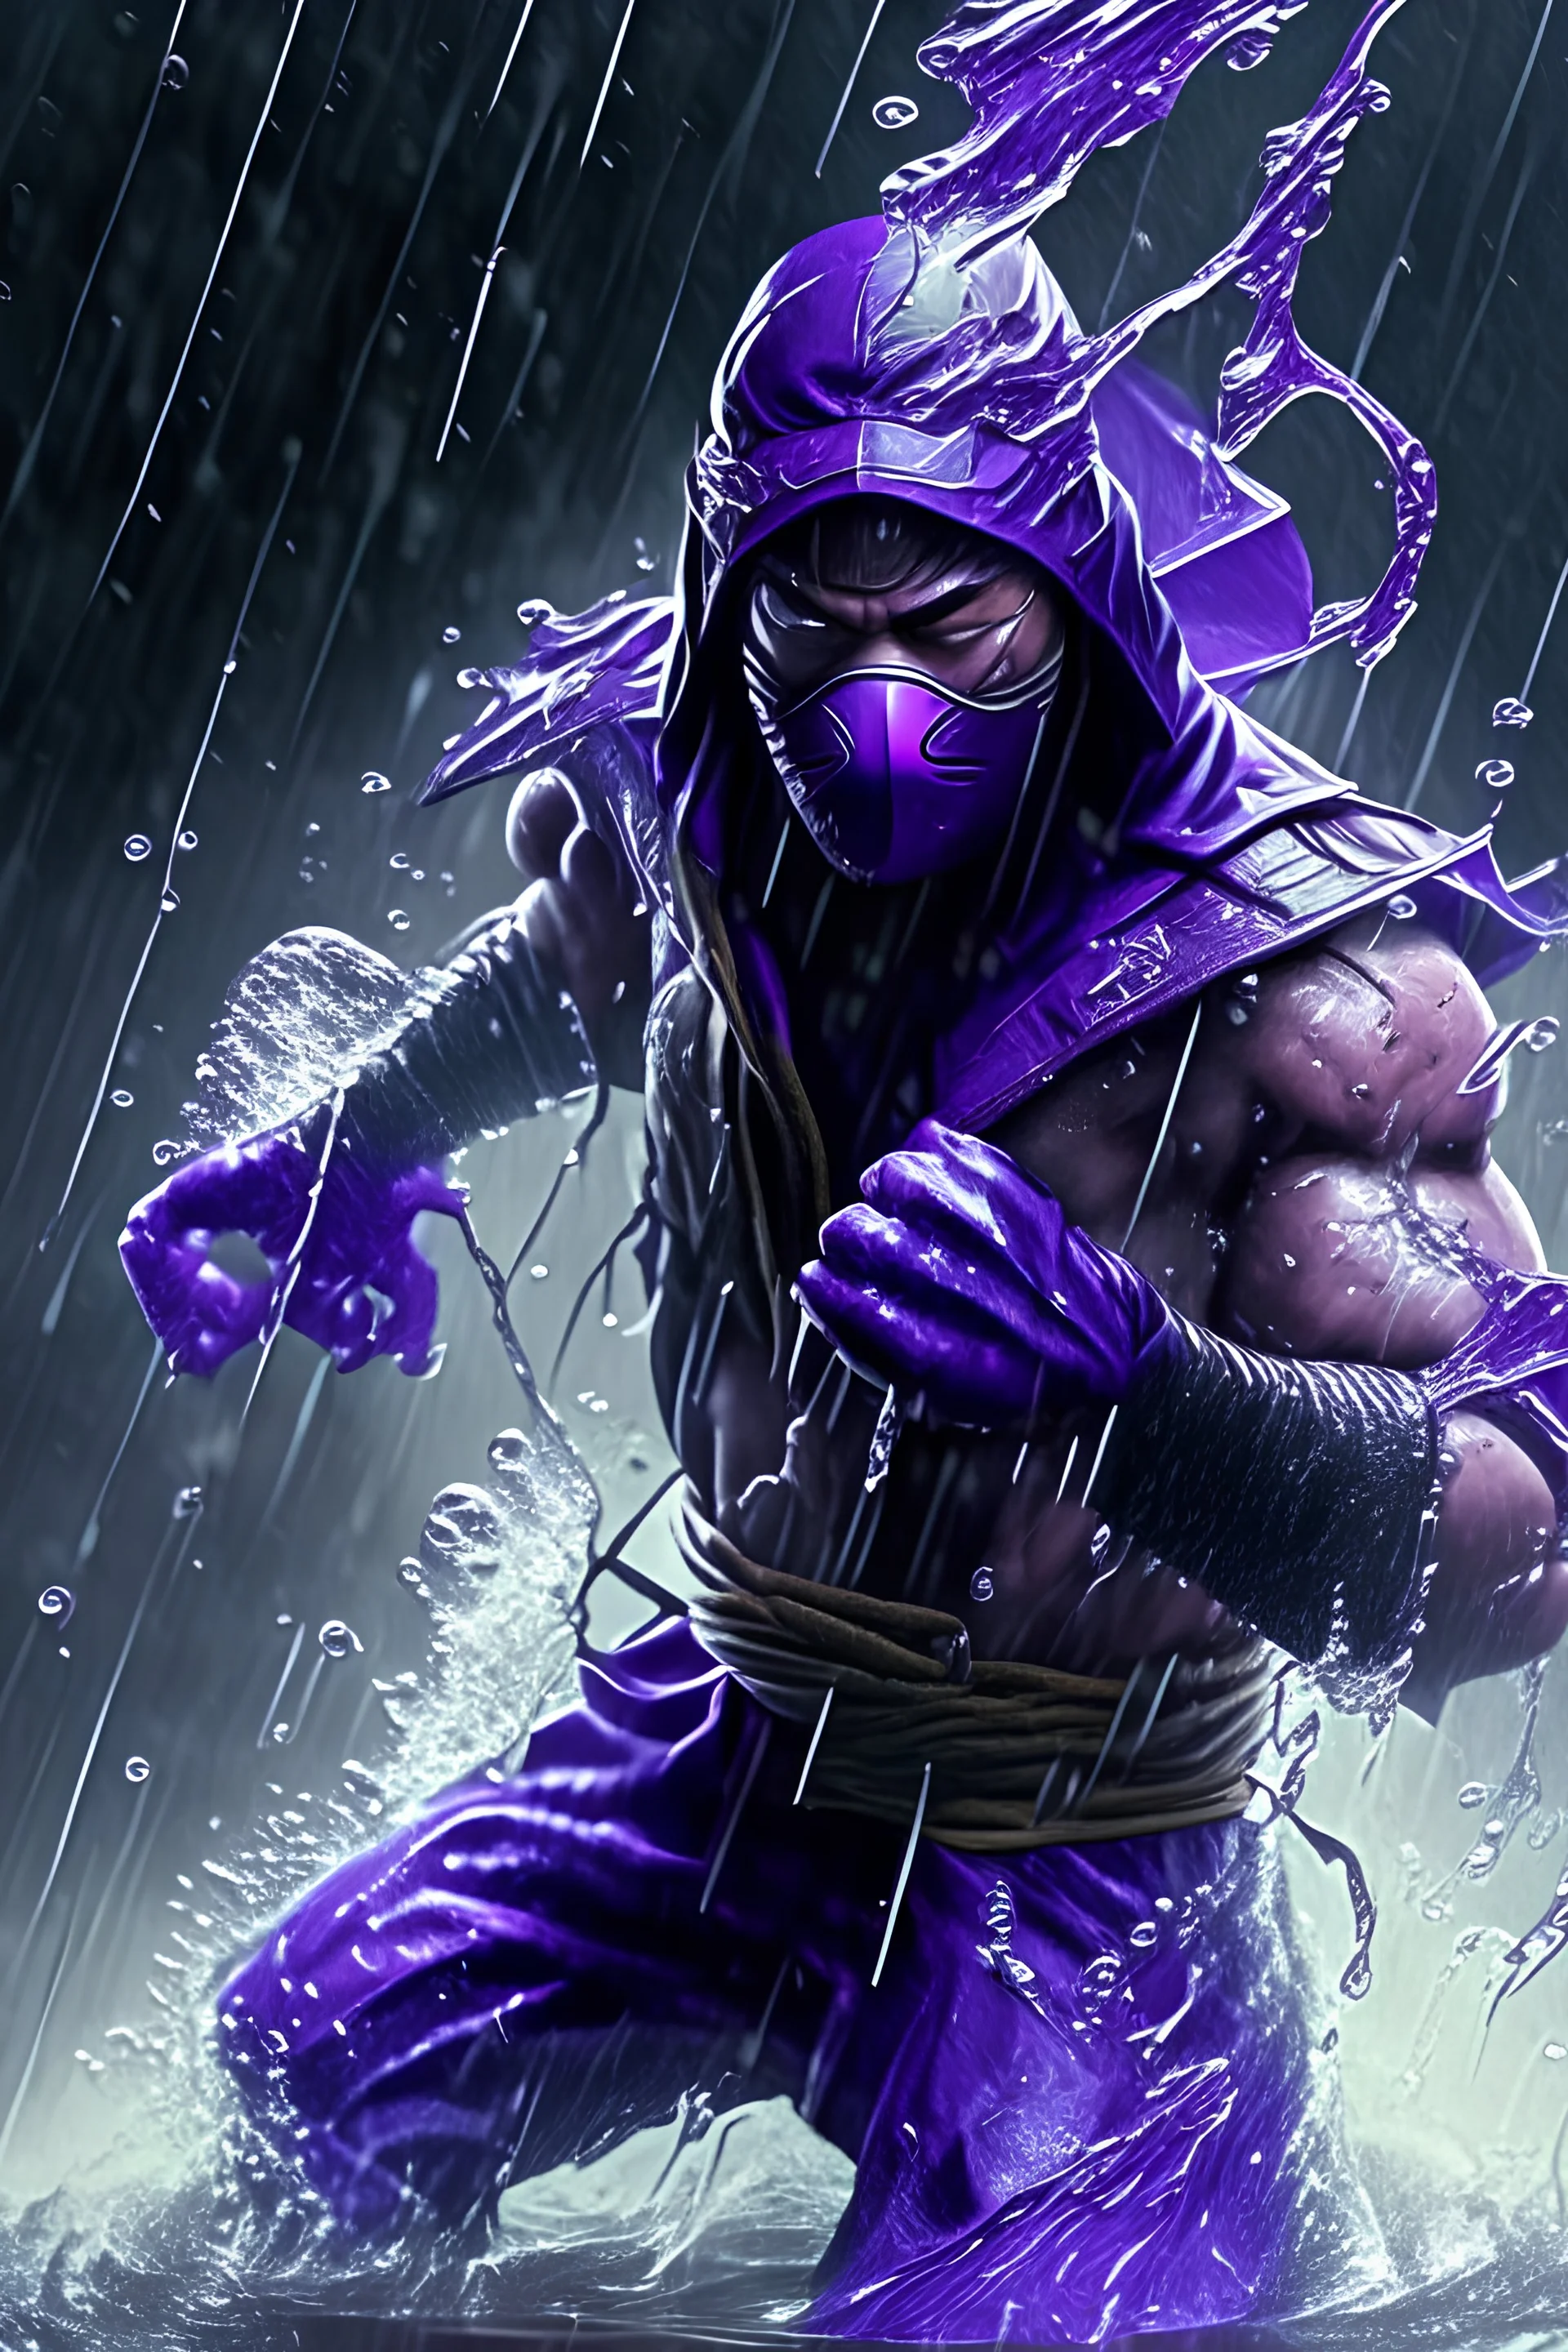 10k hyper realistic detailed Rain the masked purple ninja water demi god using his water bending powers (mortal Kombat) in forrest